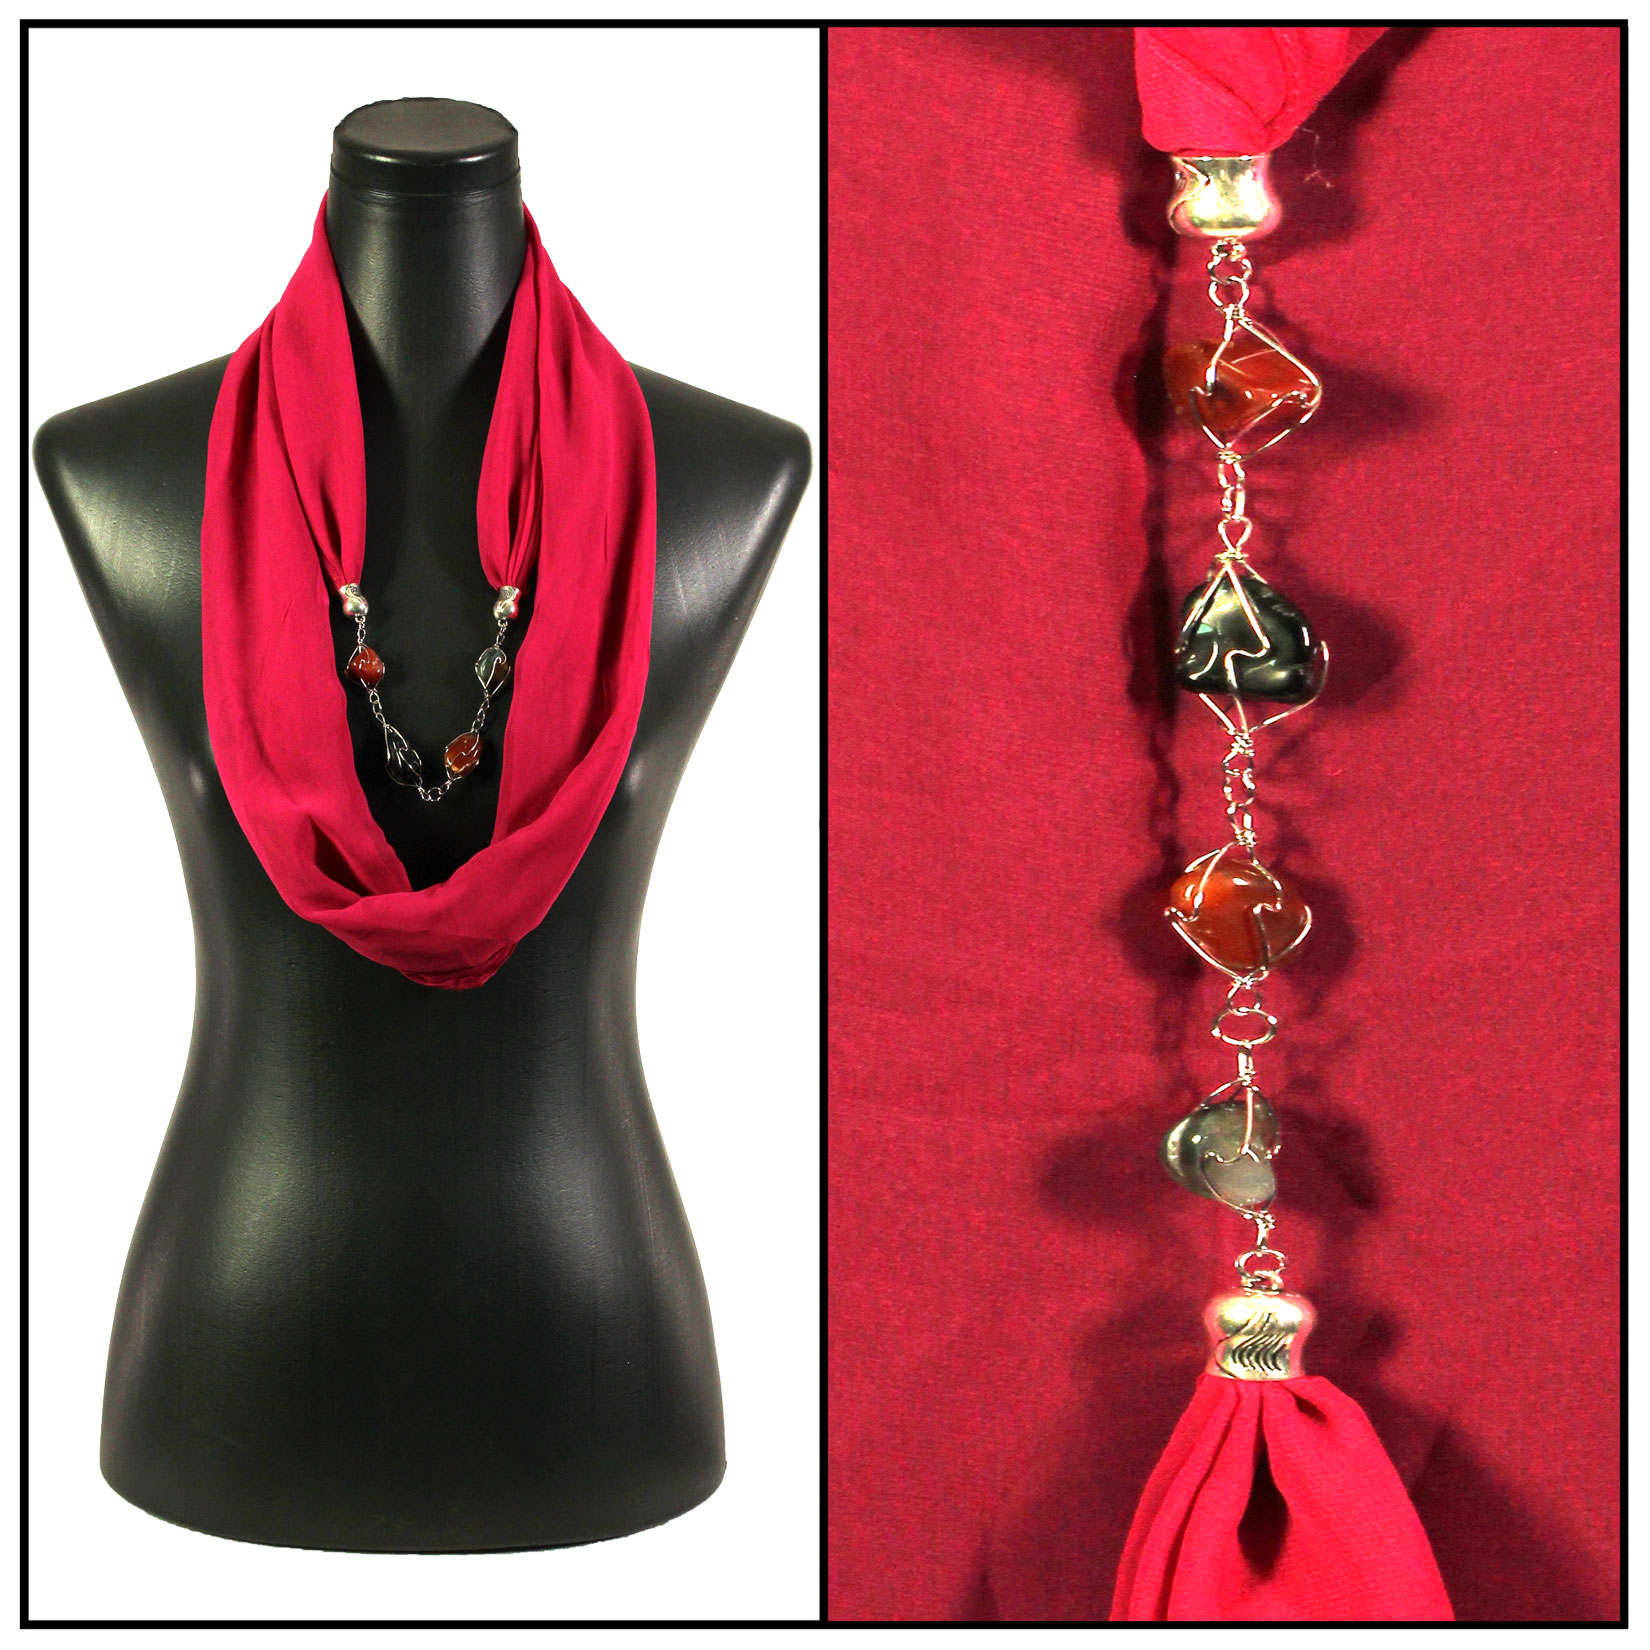 8074 - Solid Magenta Jewelry Infinity Silky Dress Scarves